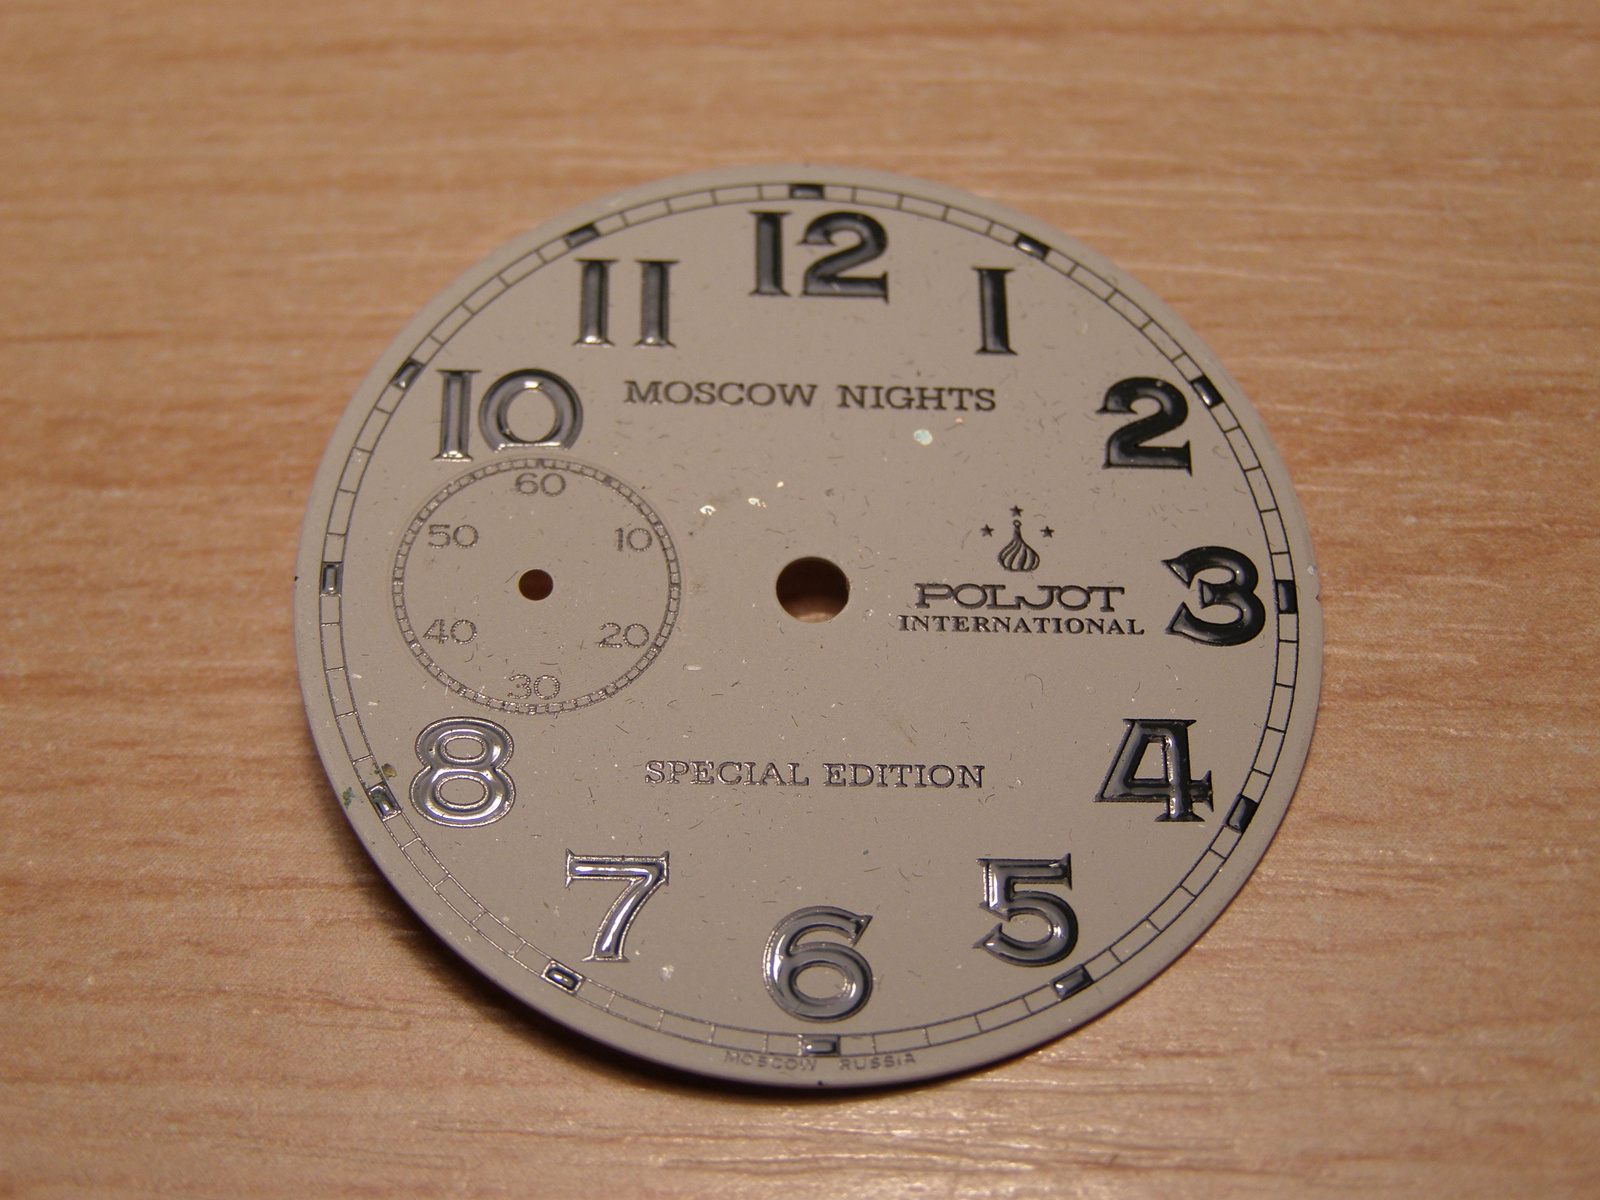 Poljot Moscow Nights dial